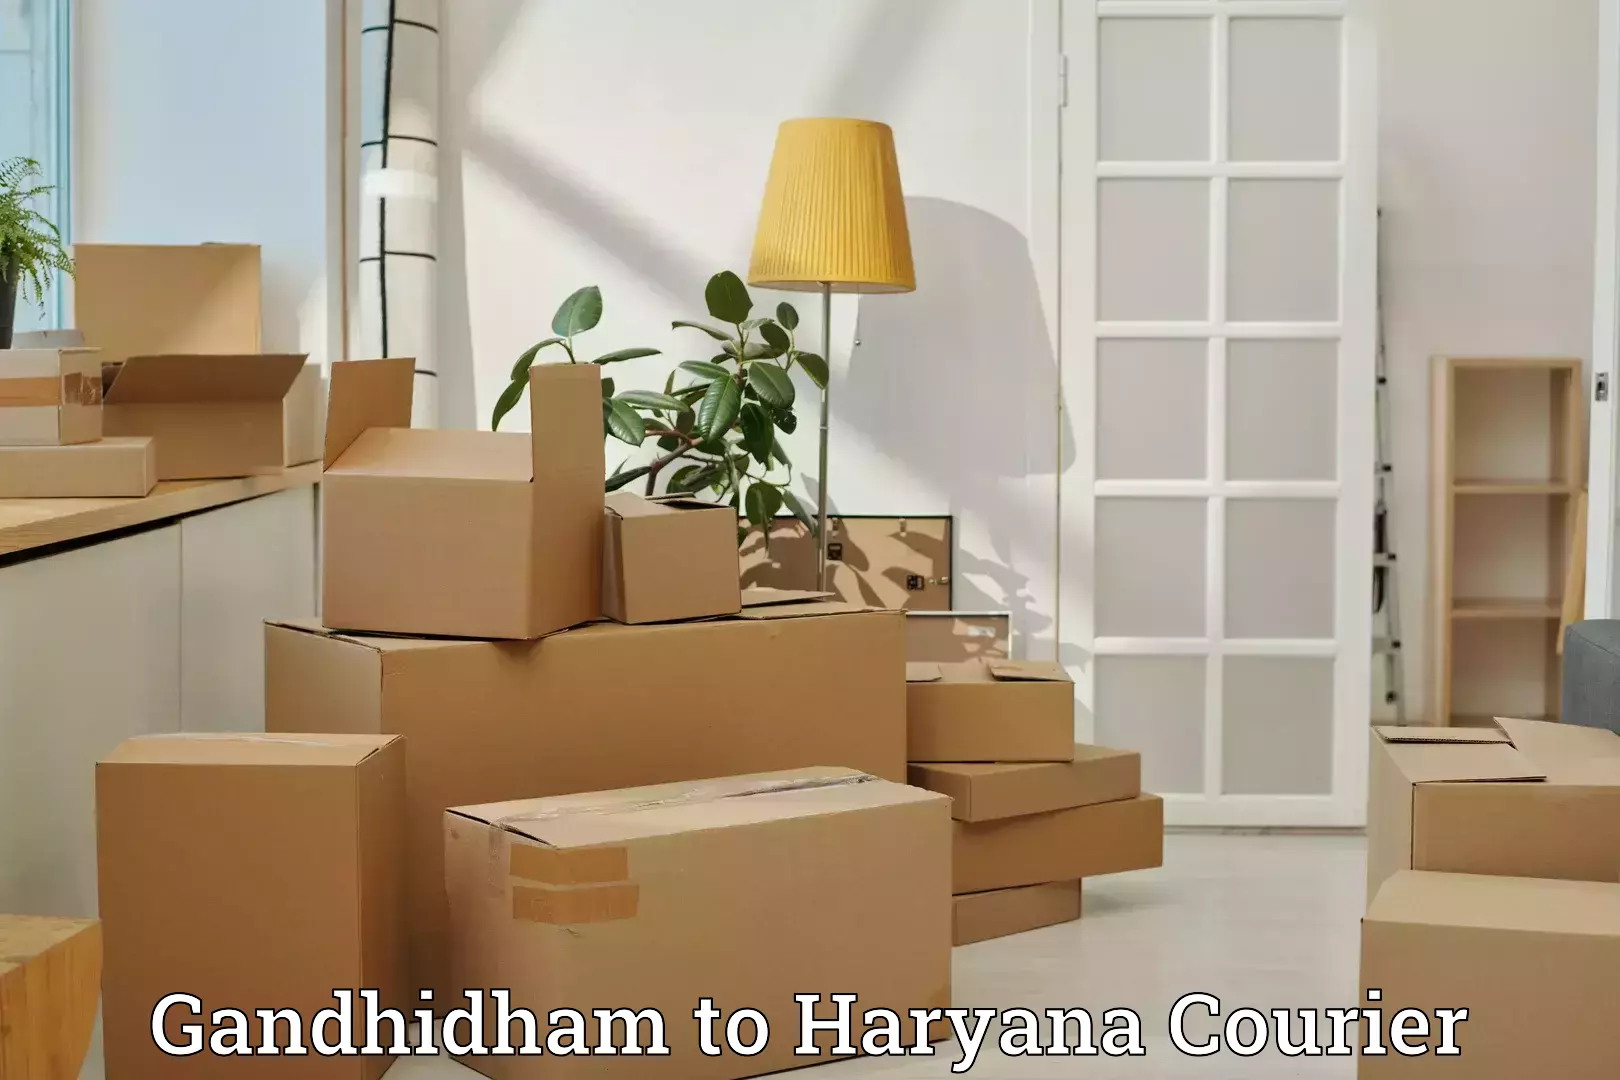 Luggage shipment tracking Gandhidham to Hansi